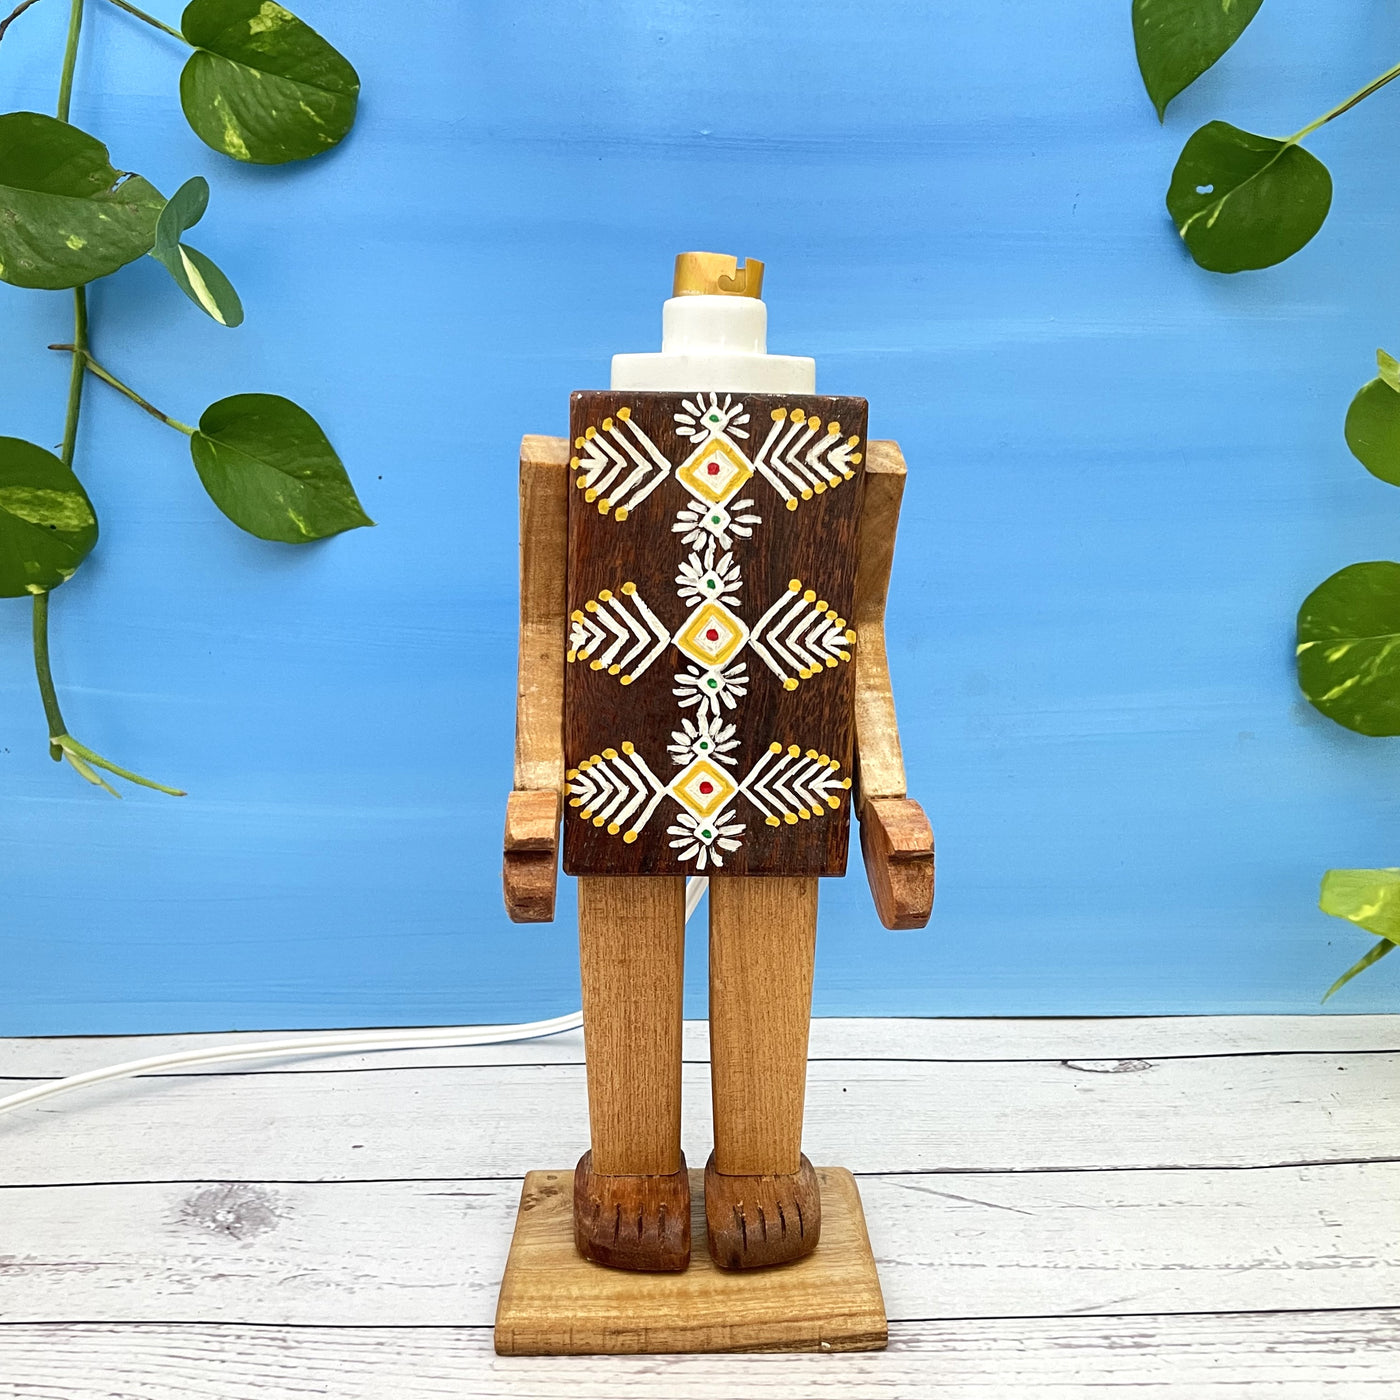 Wooden hand painted mini tribal man garden lamp